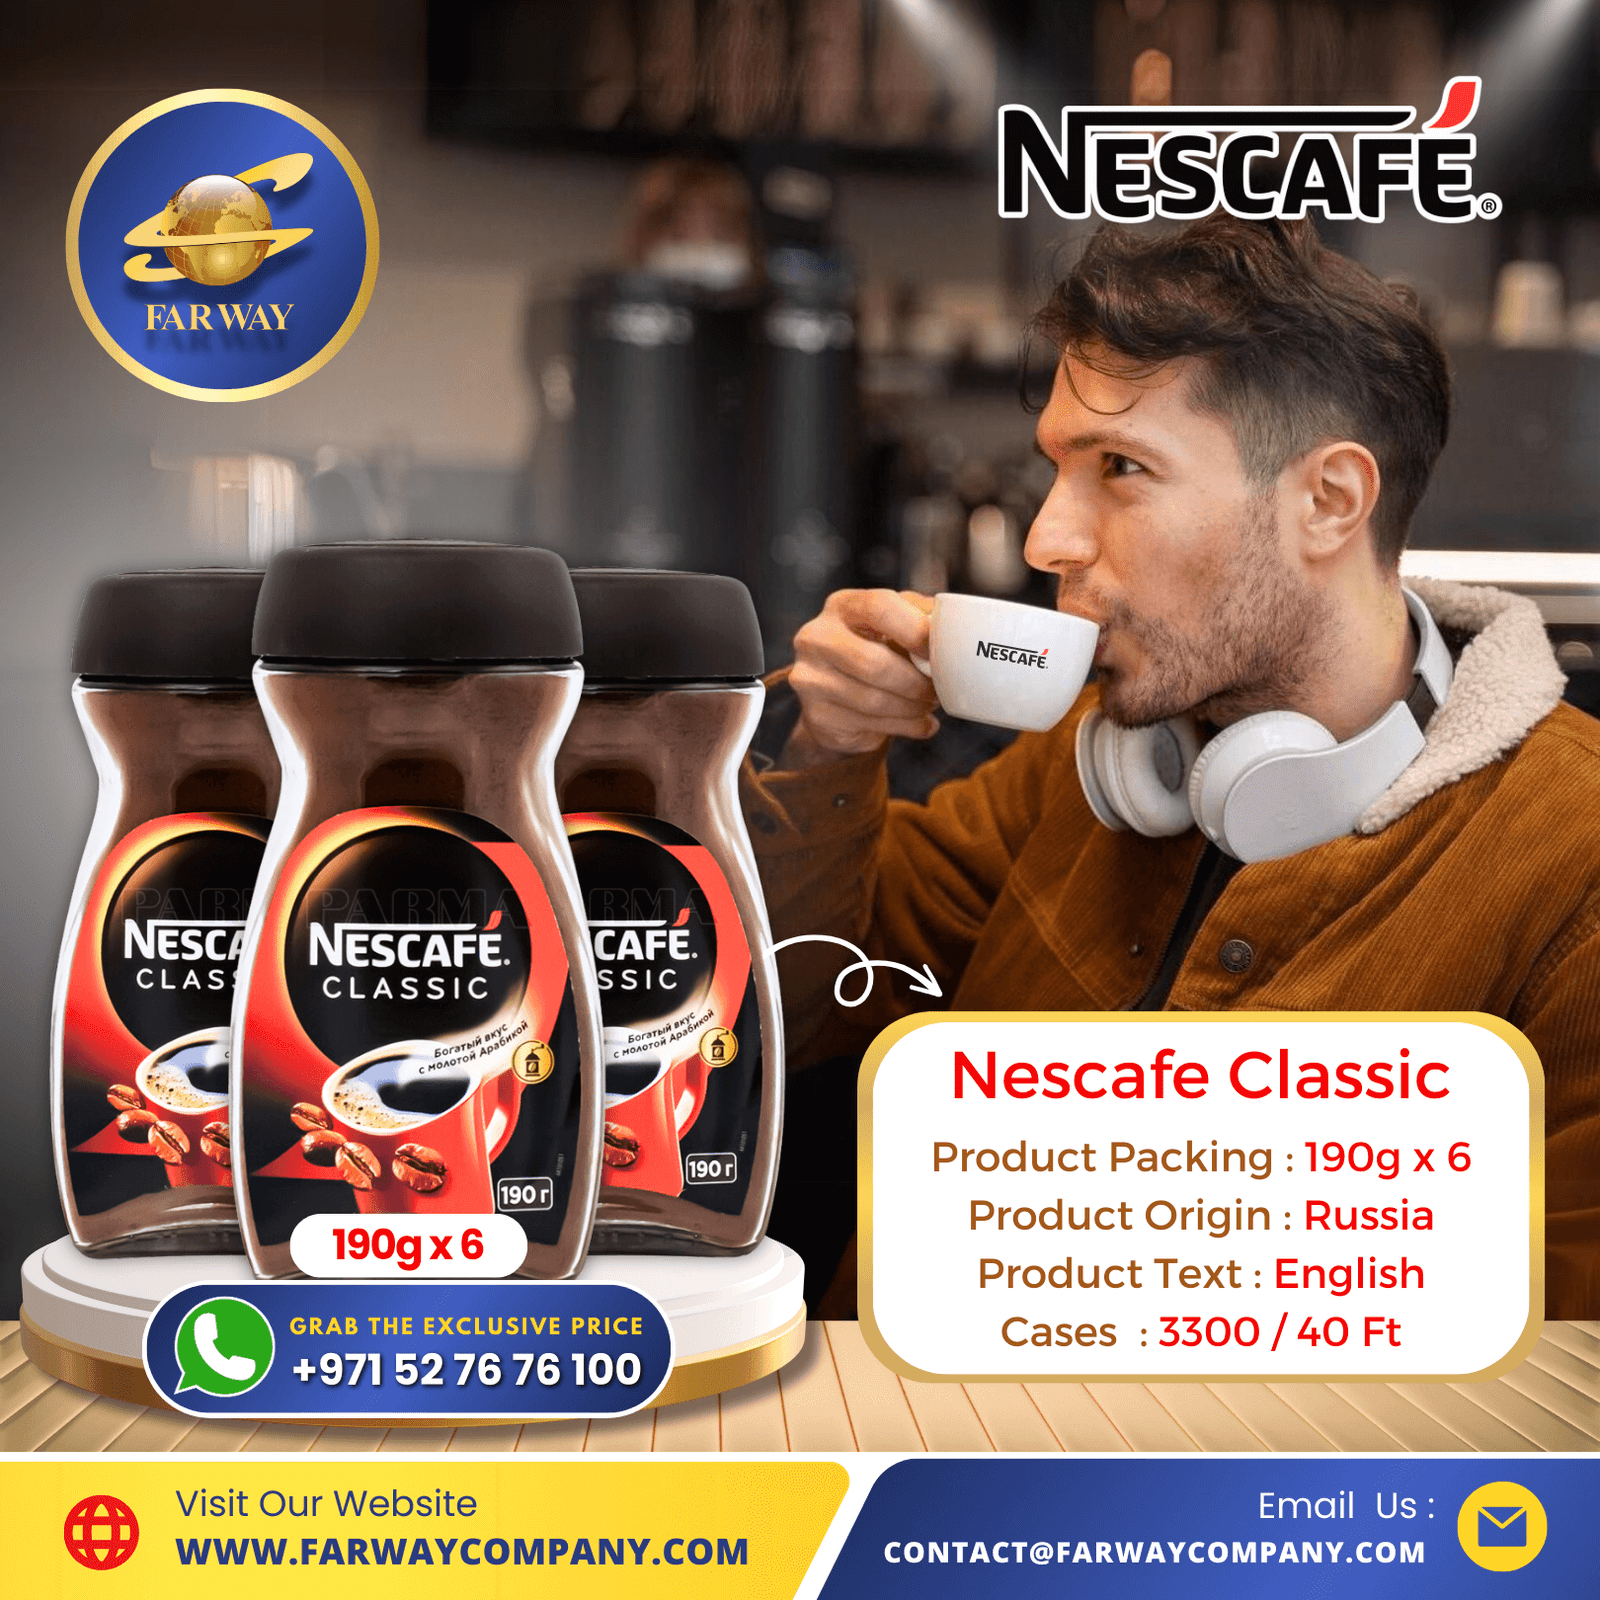 Nescafe Classic 190g Coffee Importer, Exporter & Coffee Distributor in Dubai, UAE, Middle East